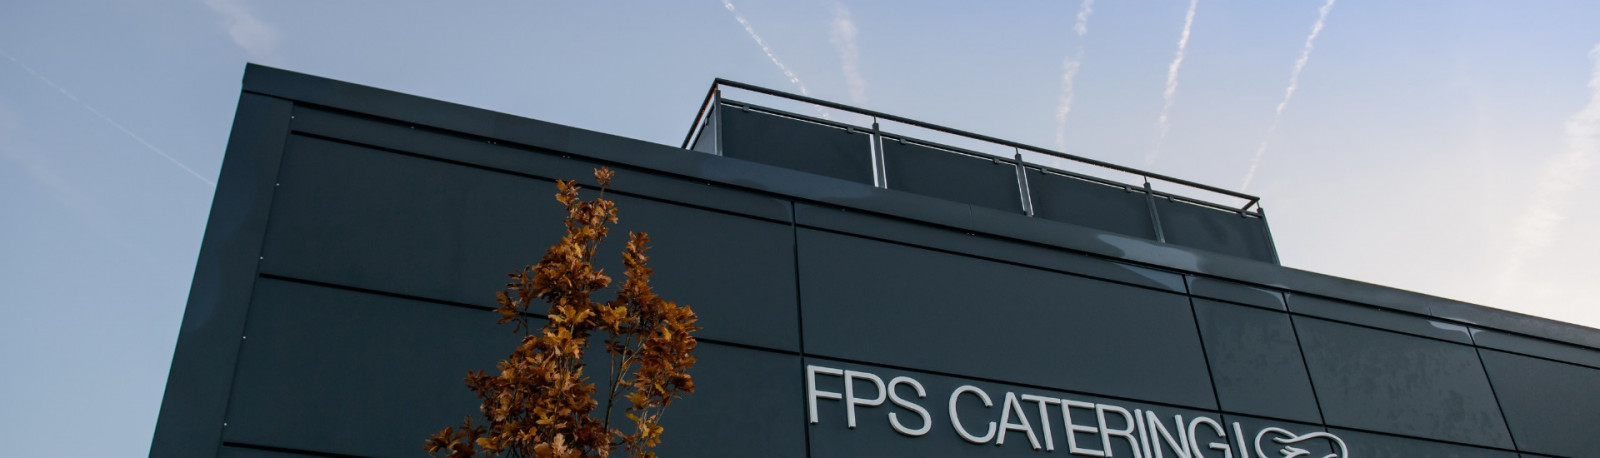 FPS Catering Karriere Standorte Header